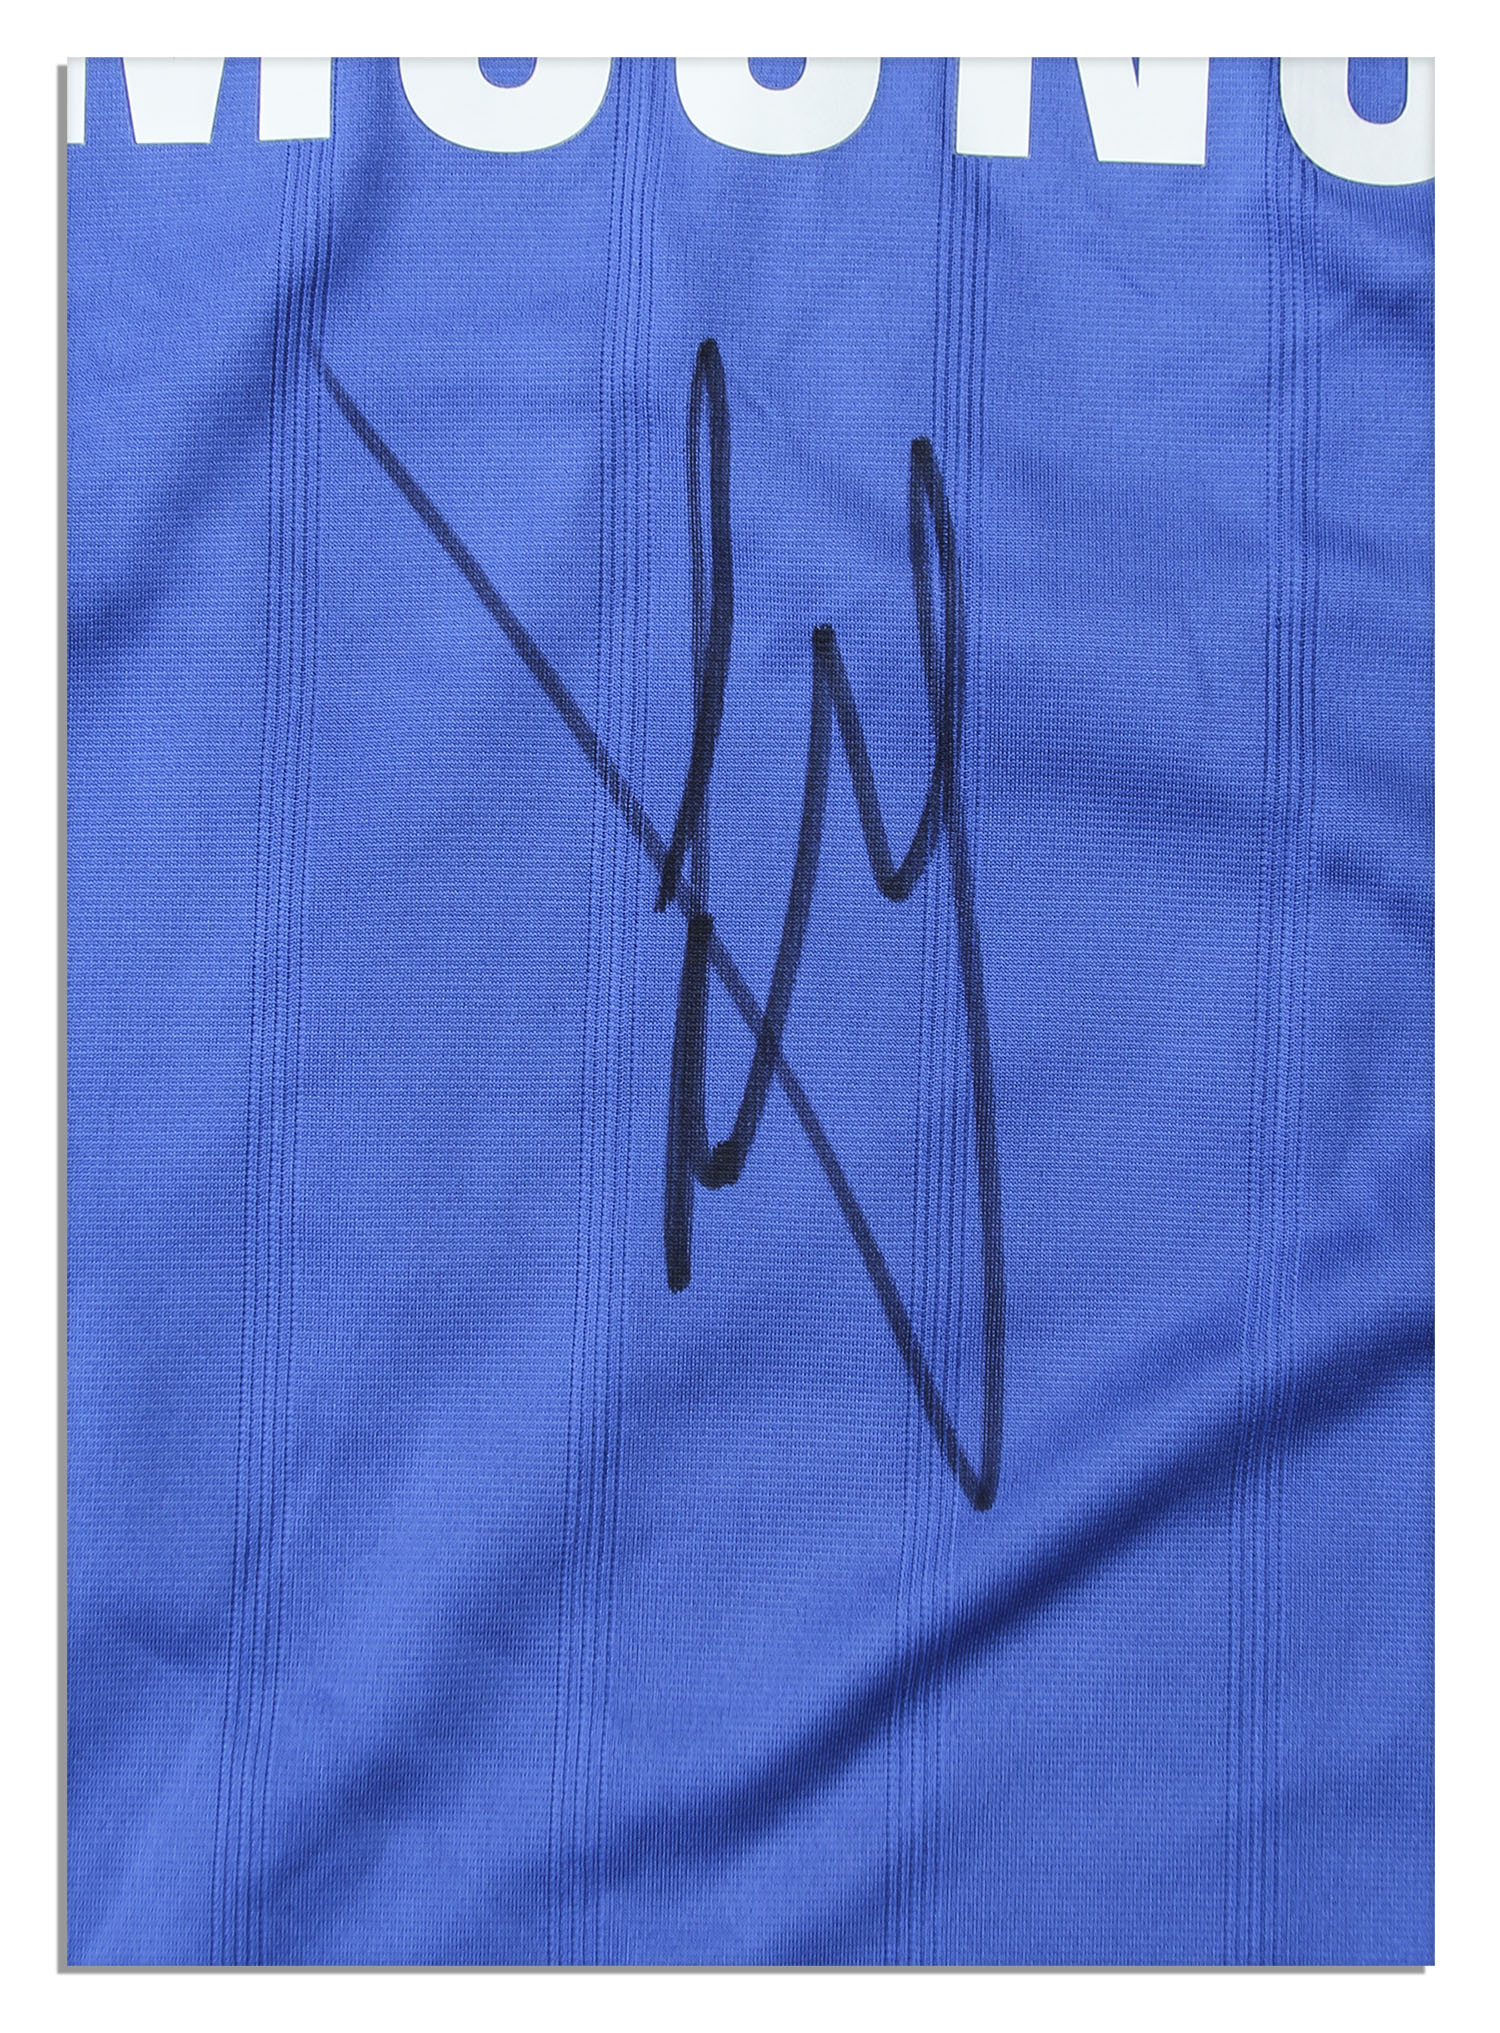 Lot Detail - Kevin De Bruyne Match Worn Chelsea Football Shirt Signed1500 x 2033